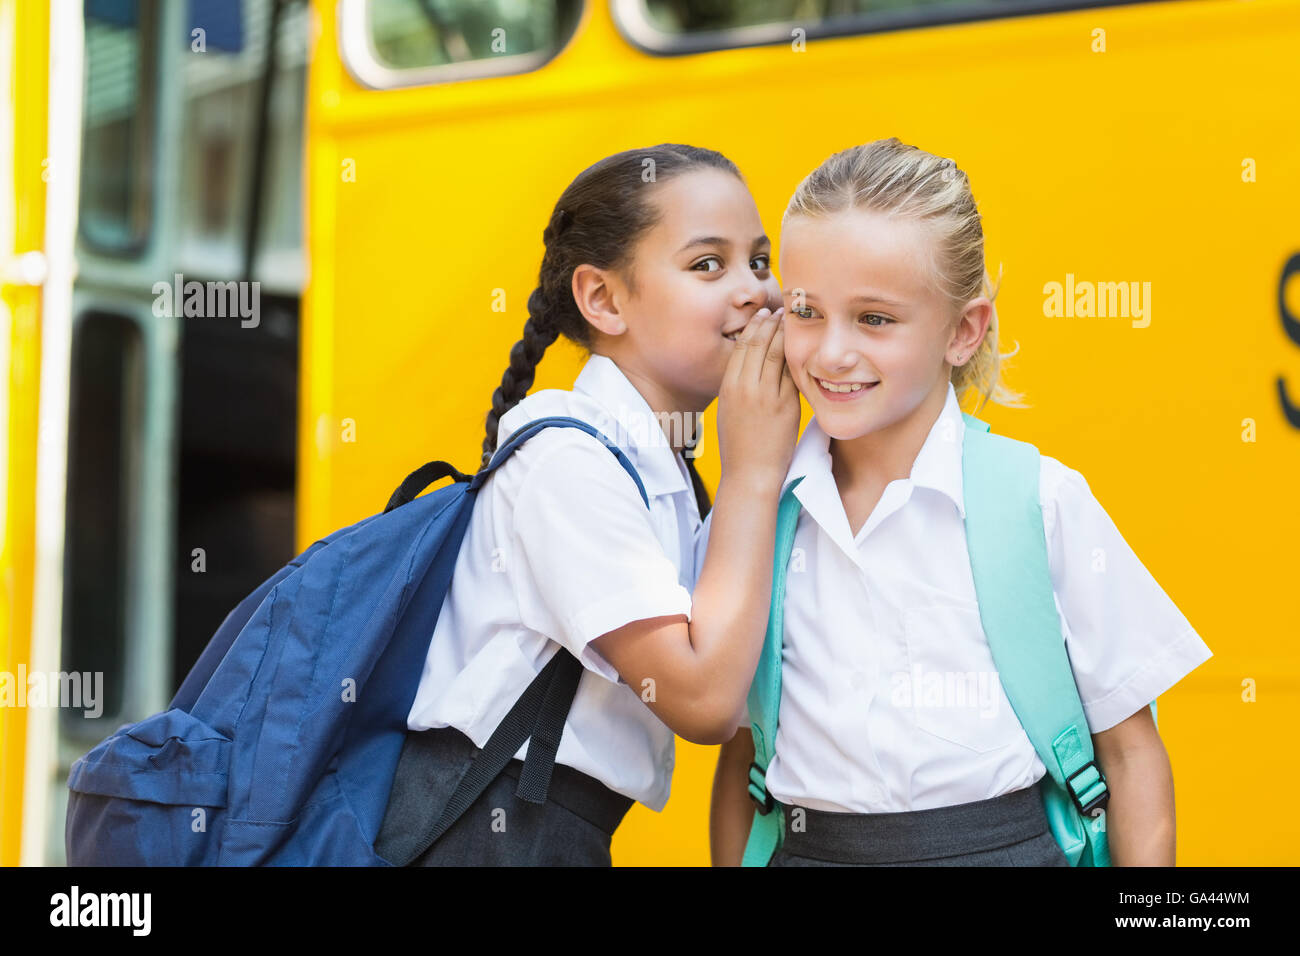 Smiling schoolgirl whispering in her friend's ear Stock Photo